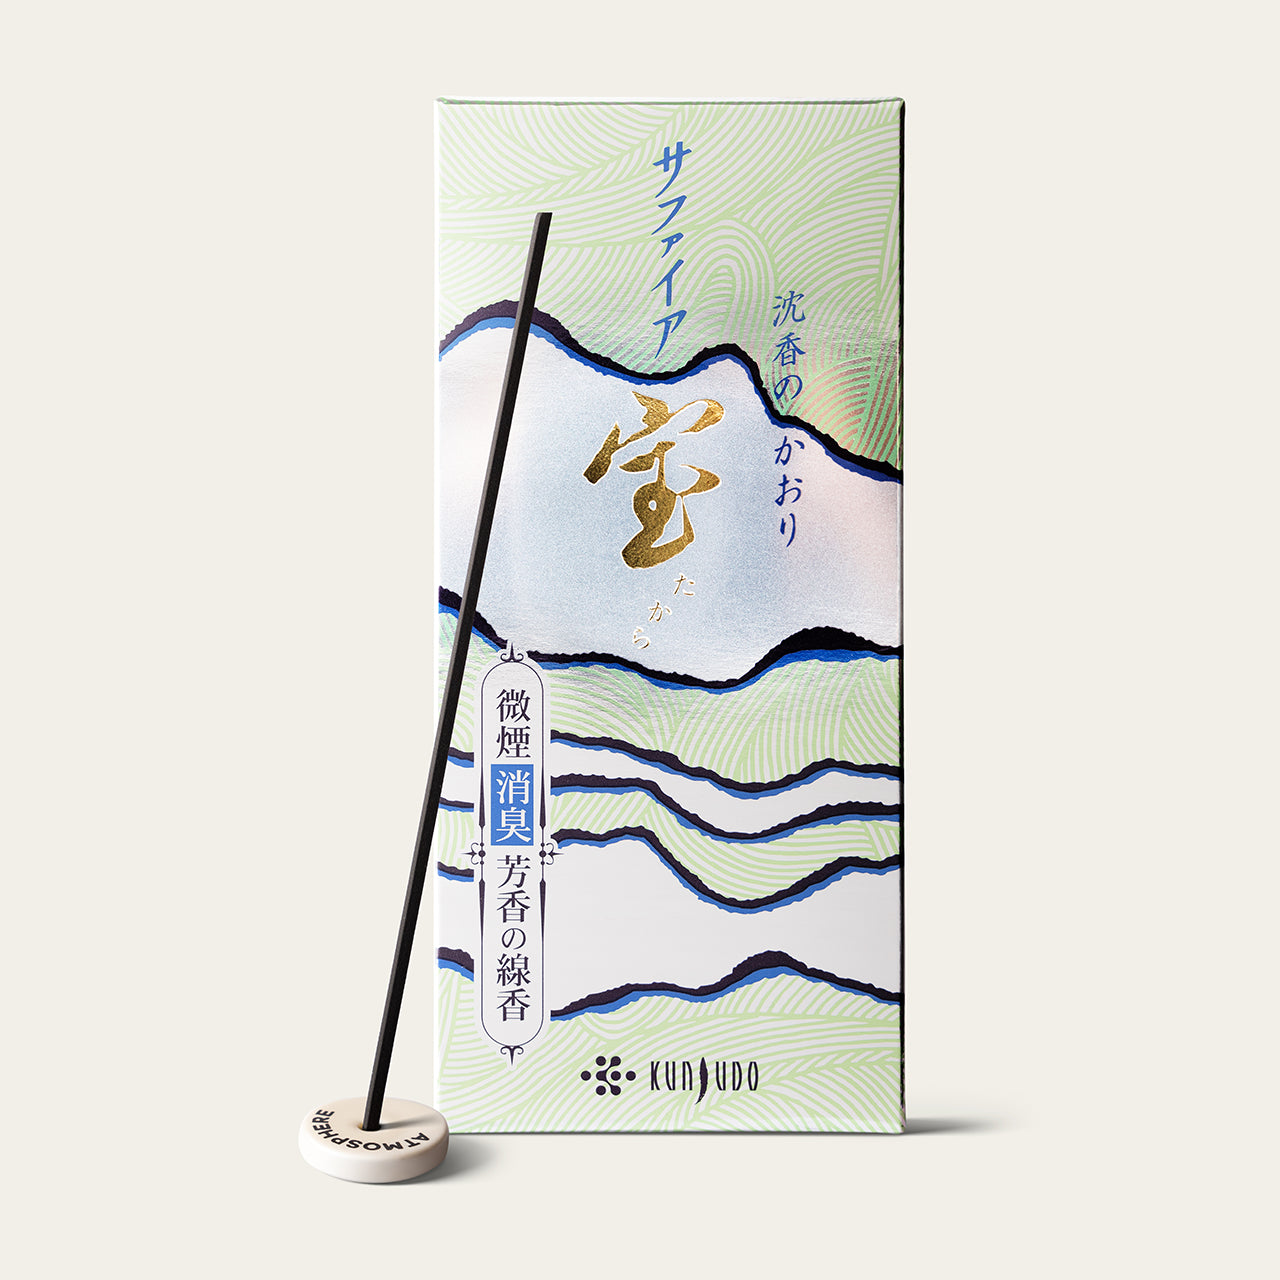 Kunjudo Sapphire Takara Japanese incense sticks (150 sticks) with Atmosphere ceramic incense holder